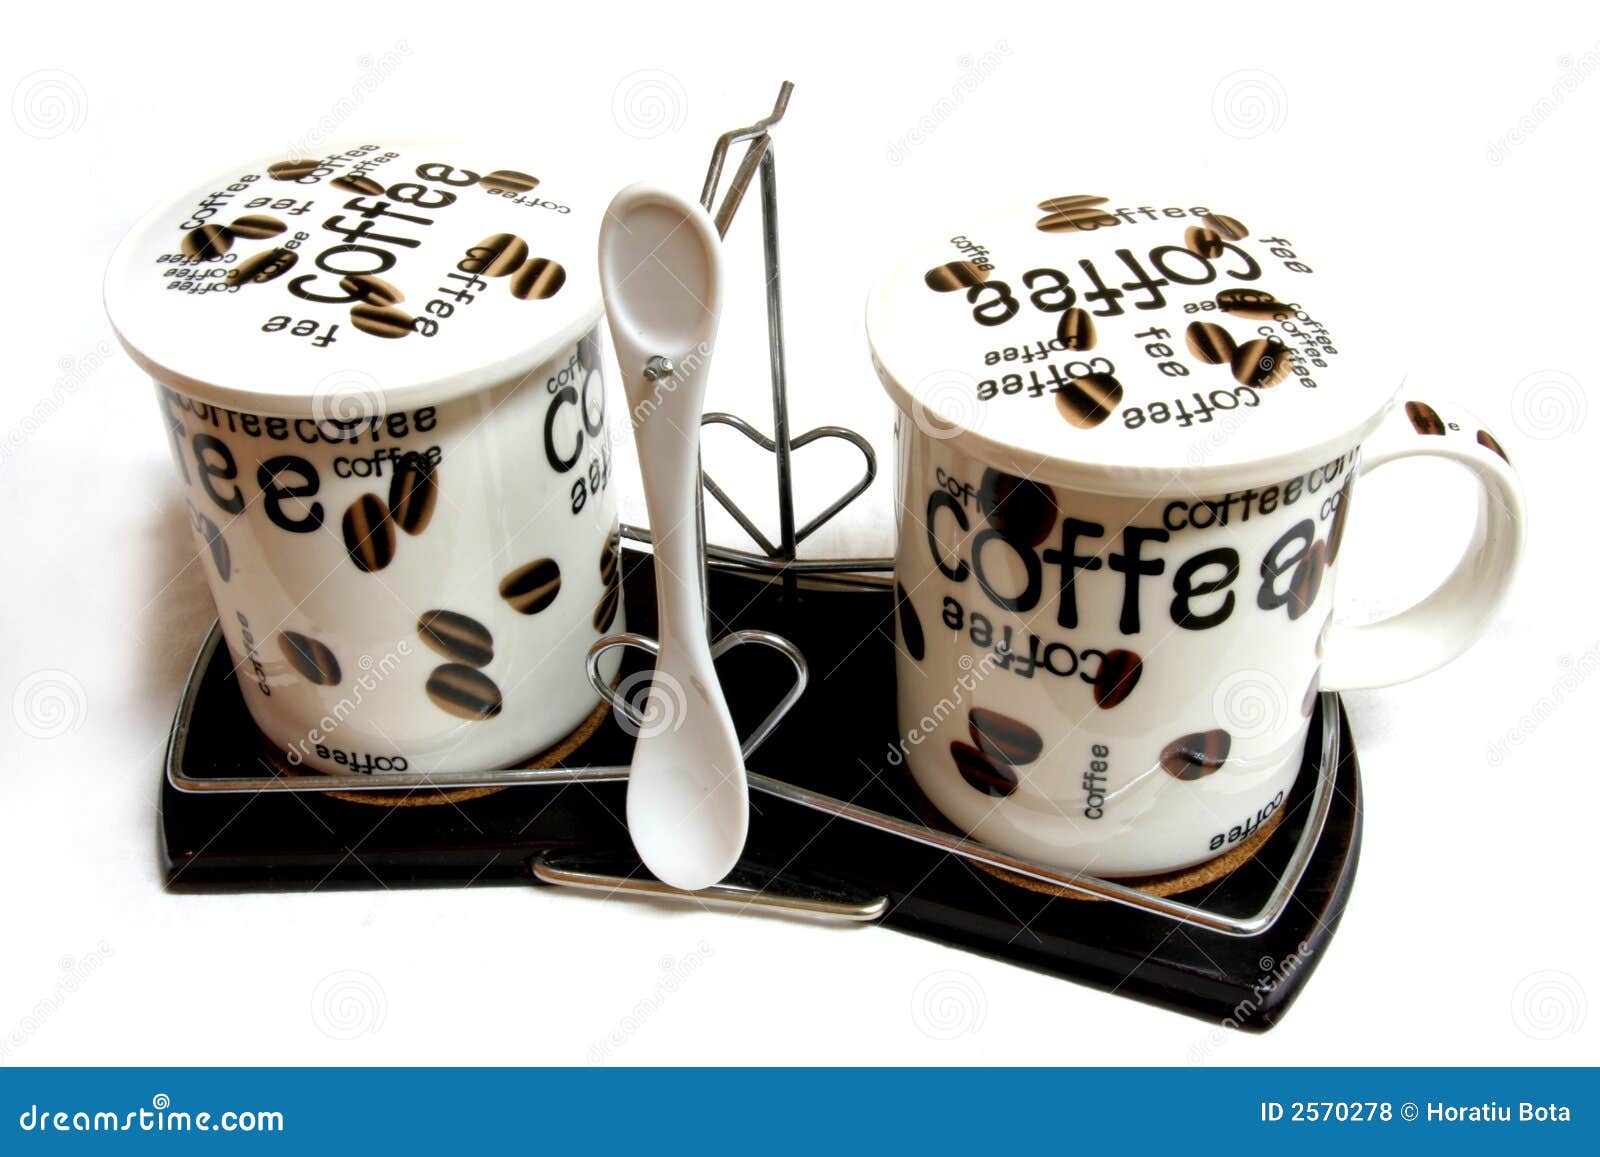 cofee cups and coffee-spoon